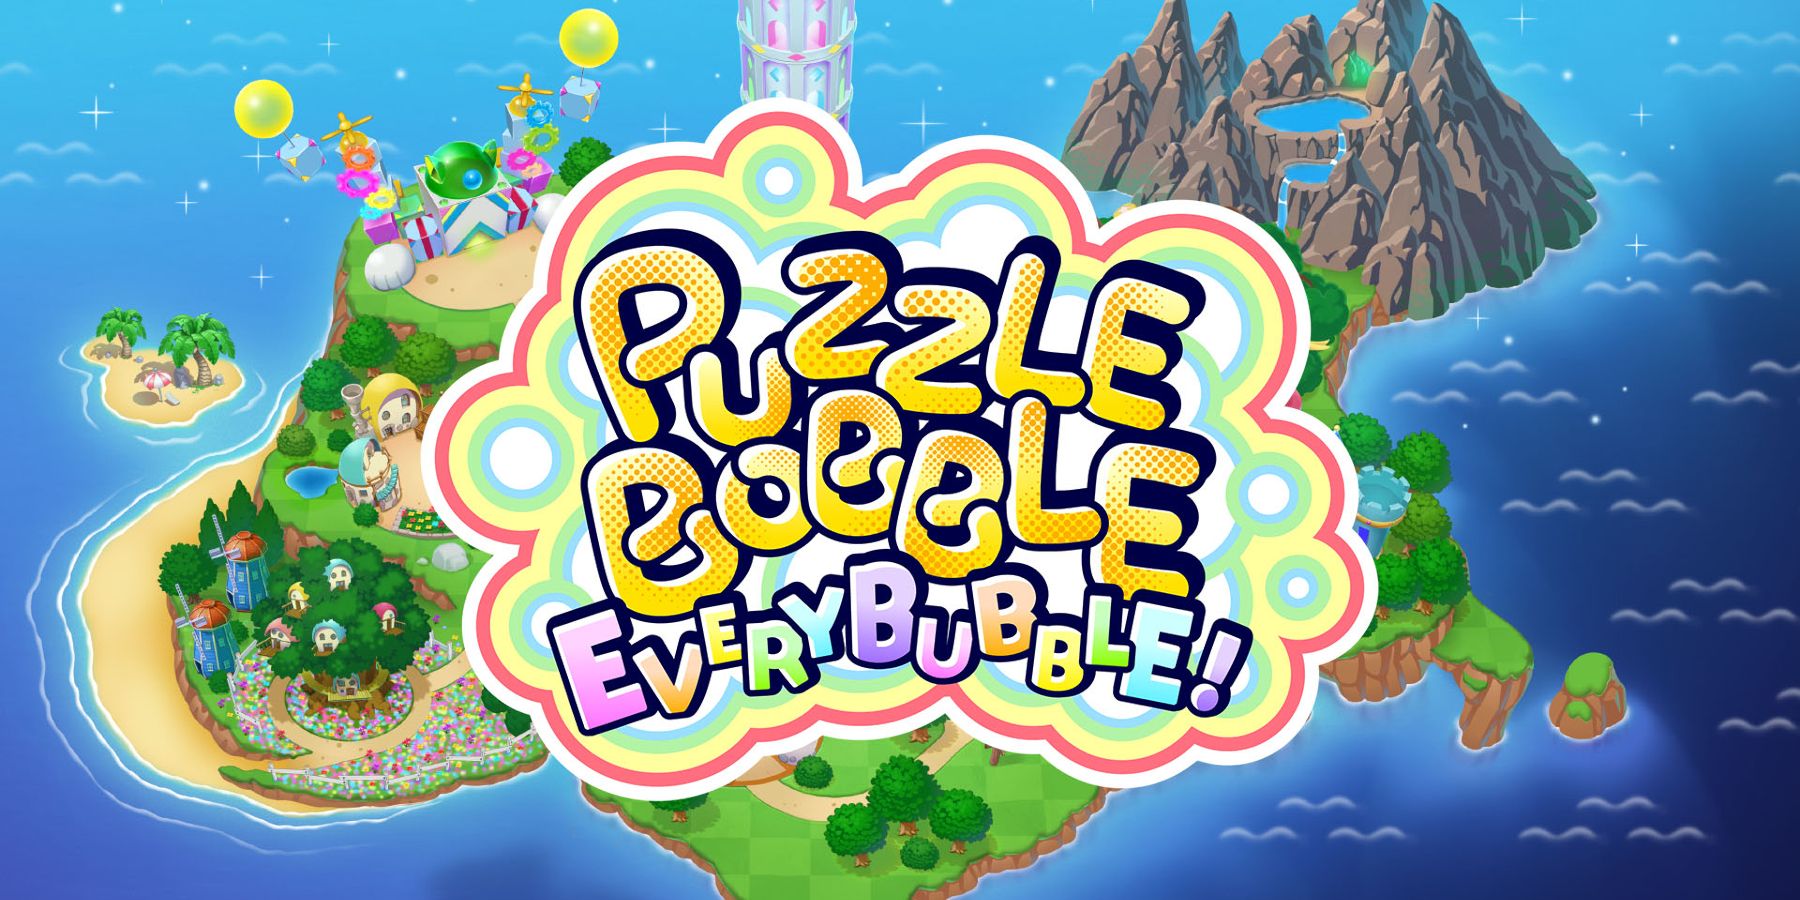 puzzle bobble everybubble world map and logo